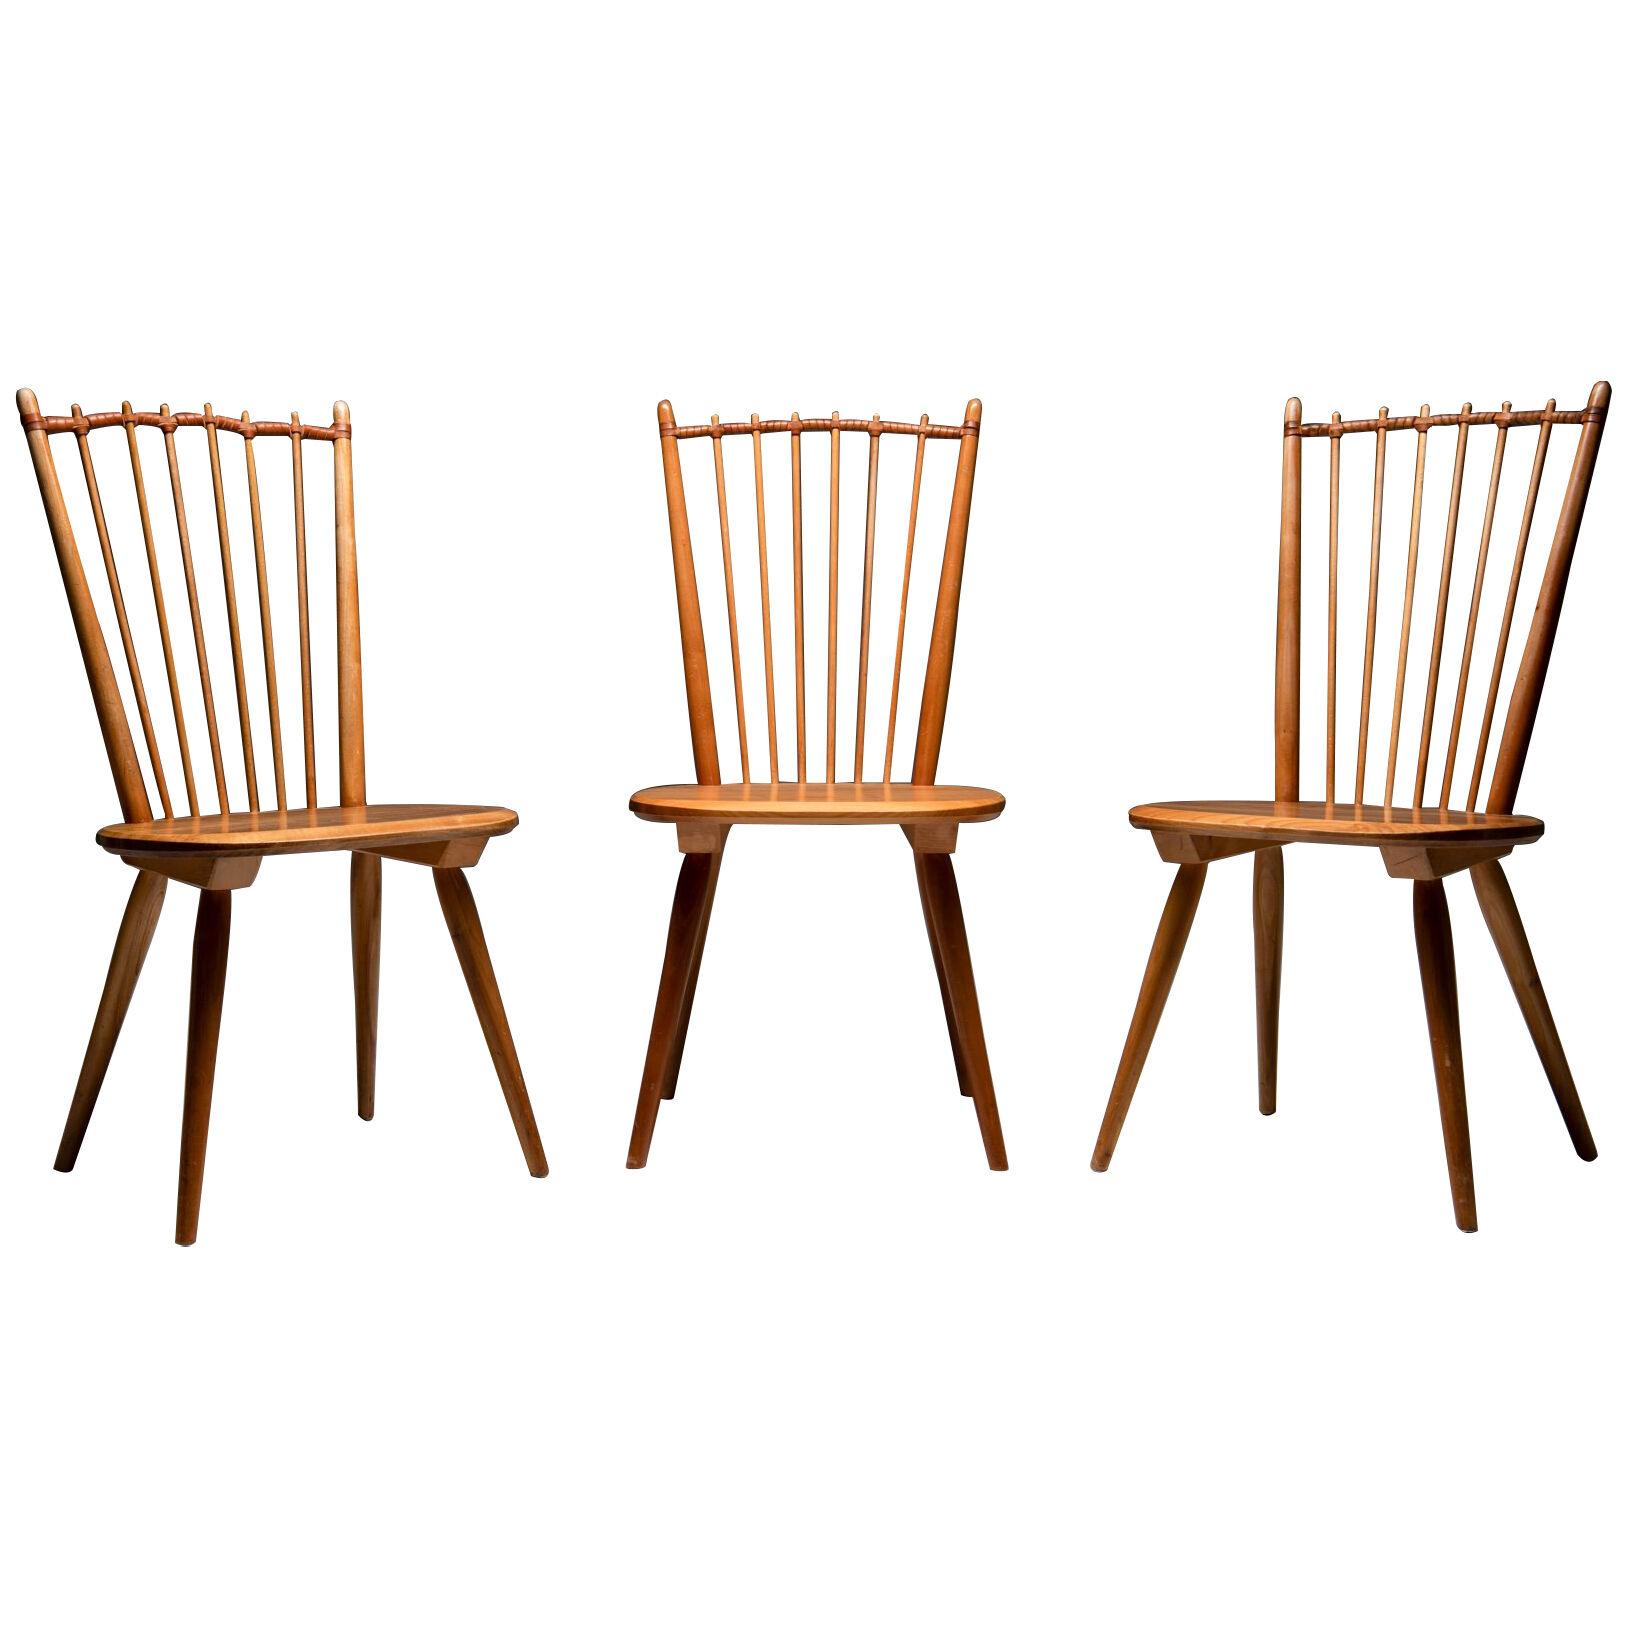 3 Windsor Style Chairs, Albert Haberer for Hermann Fleiner, 1950s, Germany